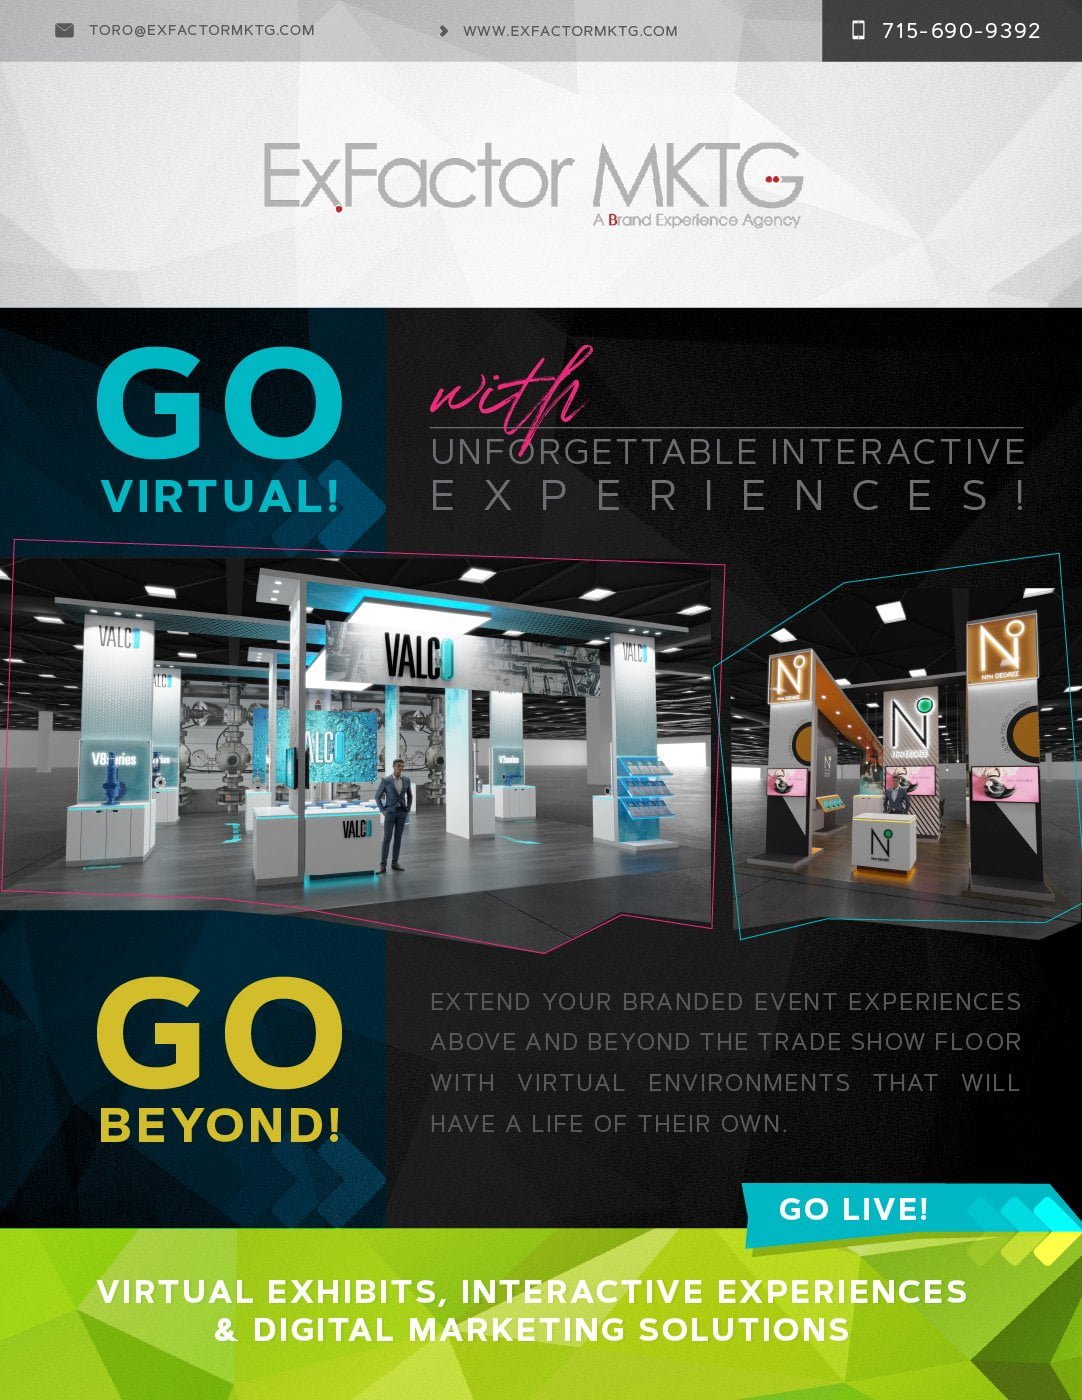 ExFactor MKTG Virtual Experiences